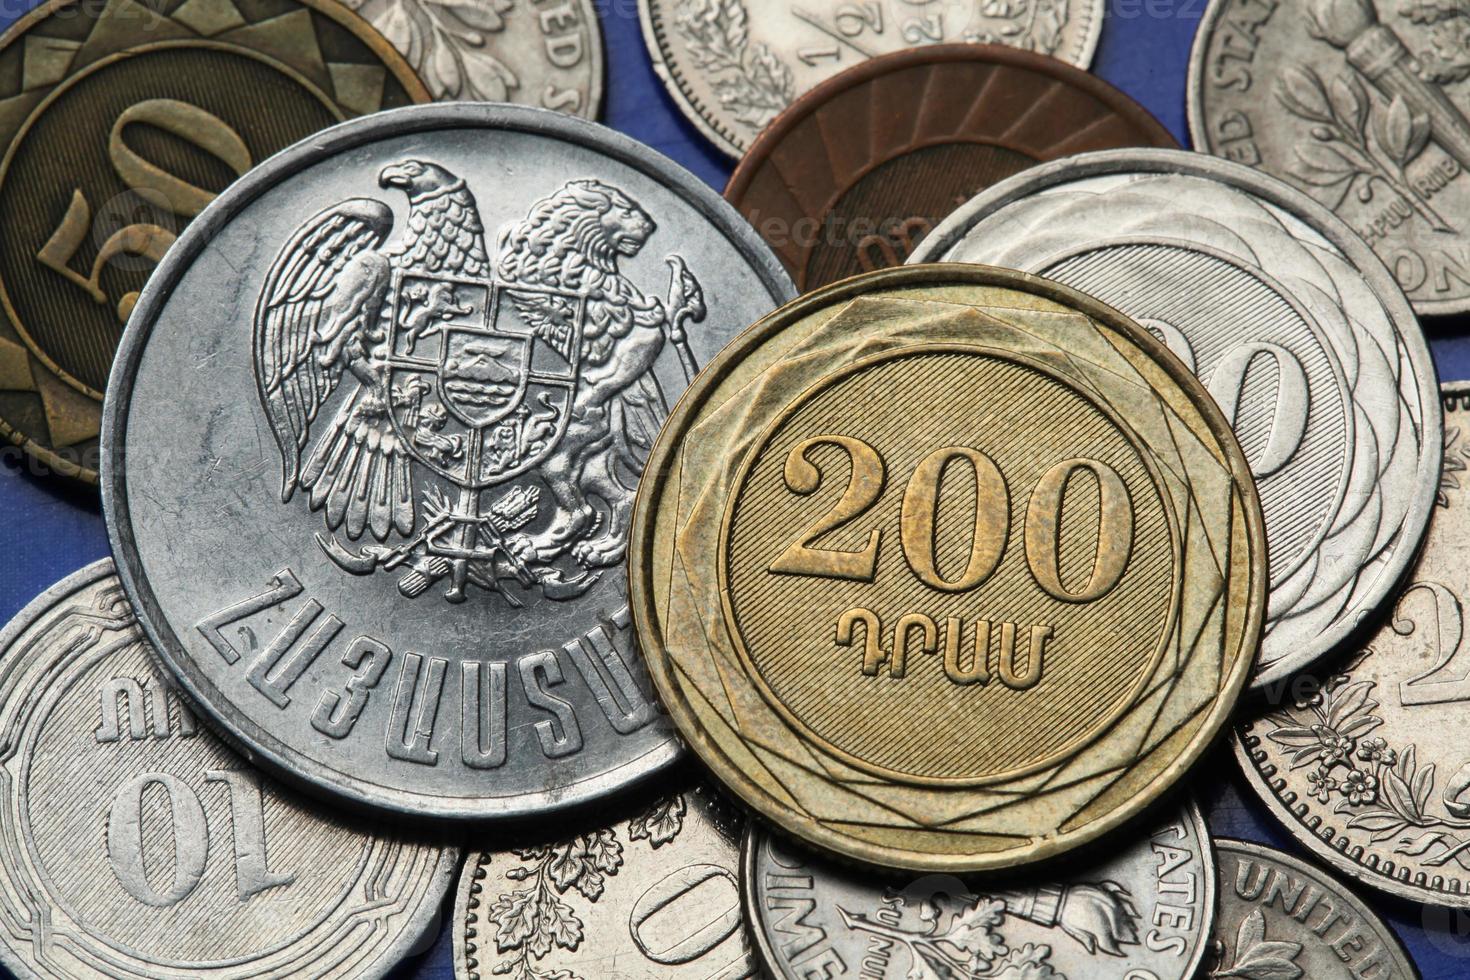 Coins of Armenia photo